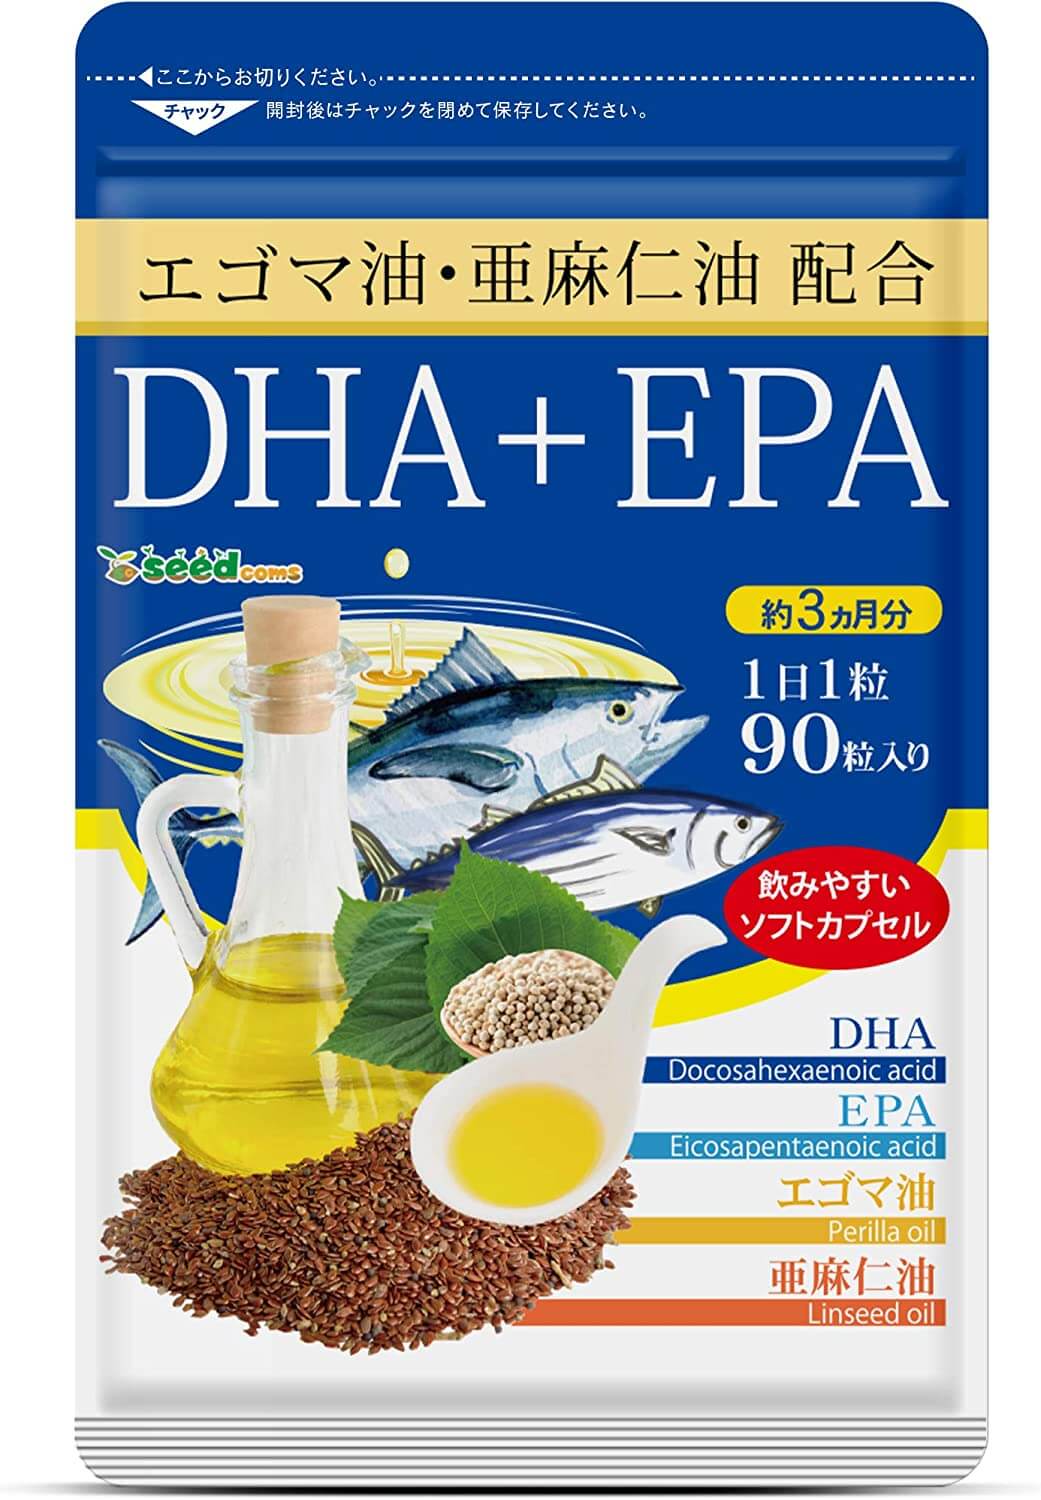 Рыбий жир Seed Coms DHA+EPA, 90 капсул бочка дубовая на подставке 5л кавказский дуб кран из латуни покрыта льняным маслом